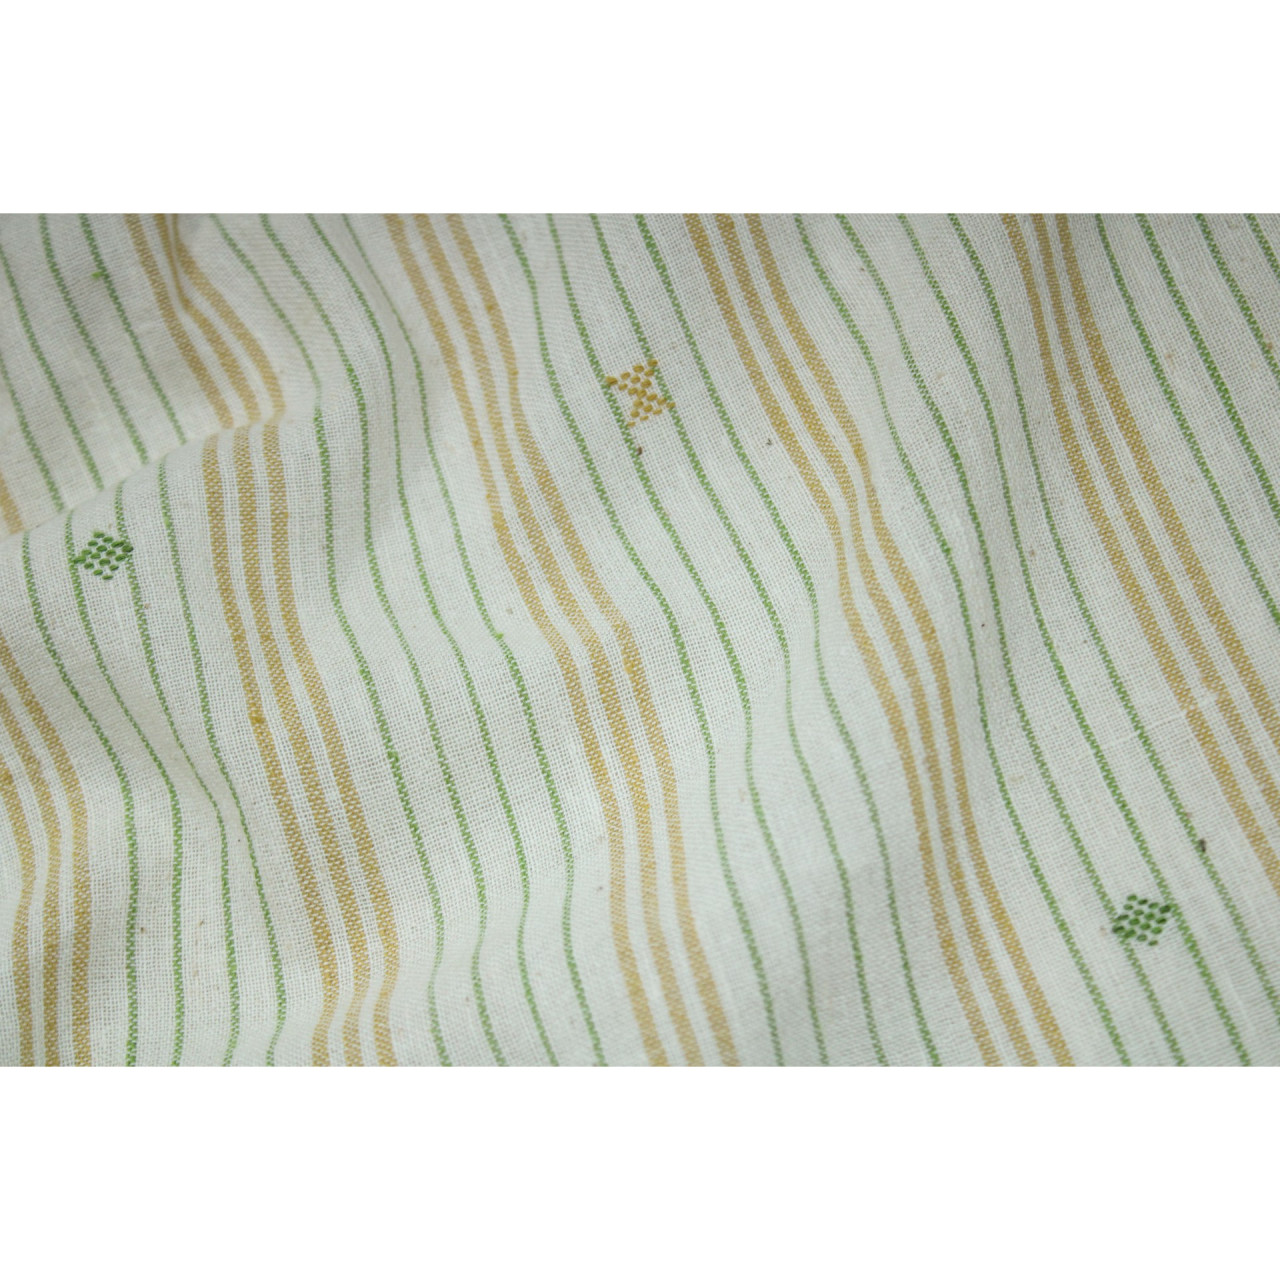 (2128) Kala cotton Azo-free dyed Kutchy yardage from Kutch with kala cotton extra-weft and kala cotton extra-weft - Green, yellow, white, motif, stripes